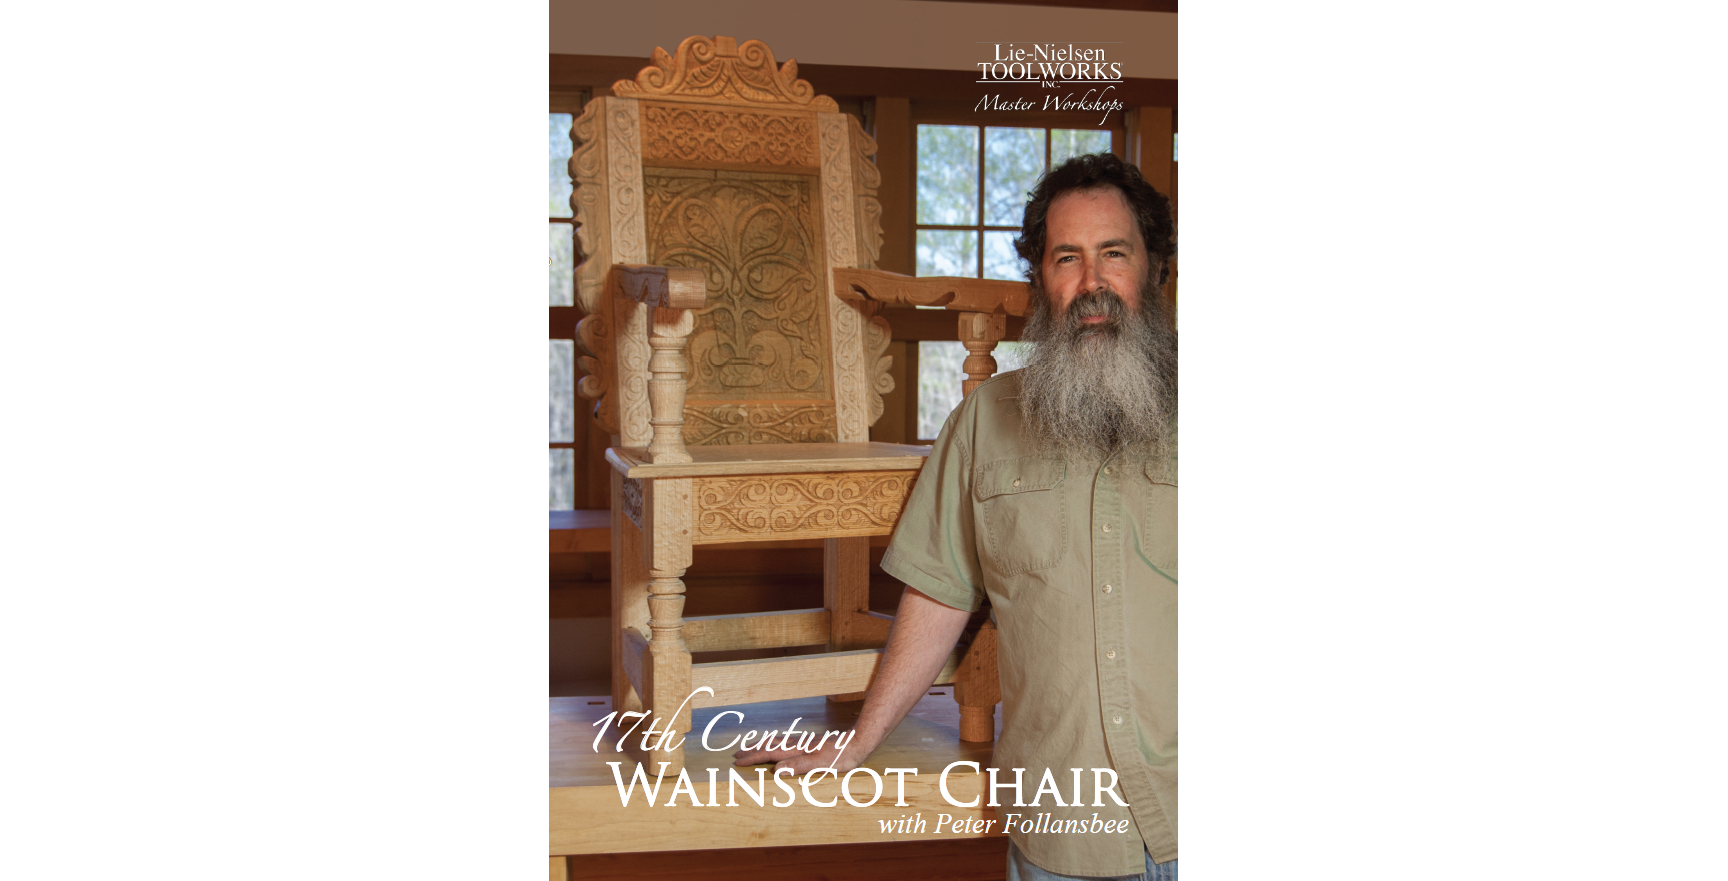 17th Century Wainscot Chair - DVD